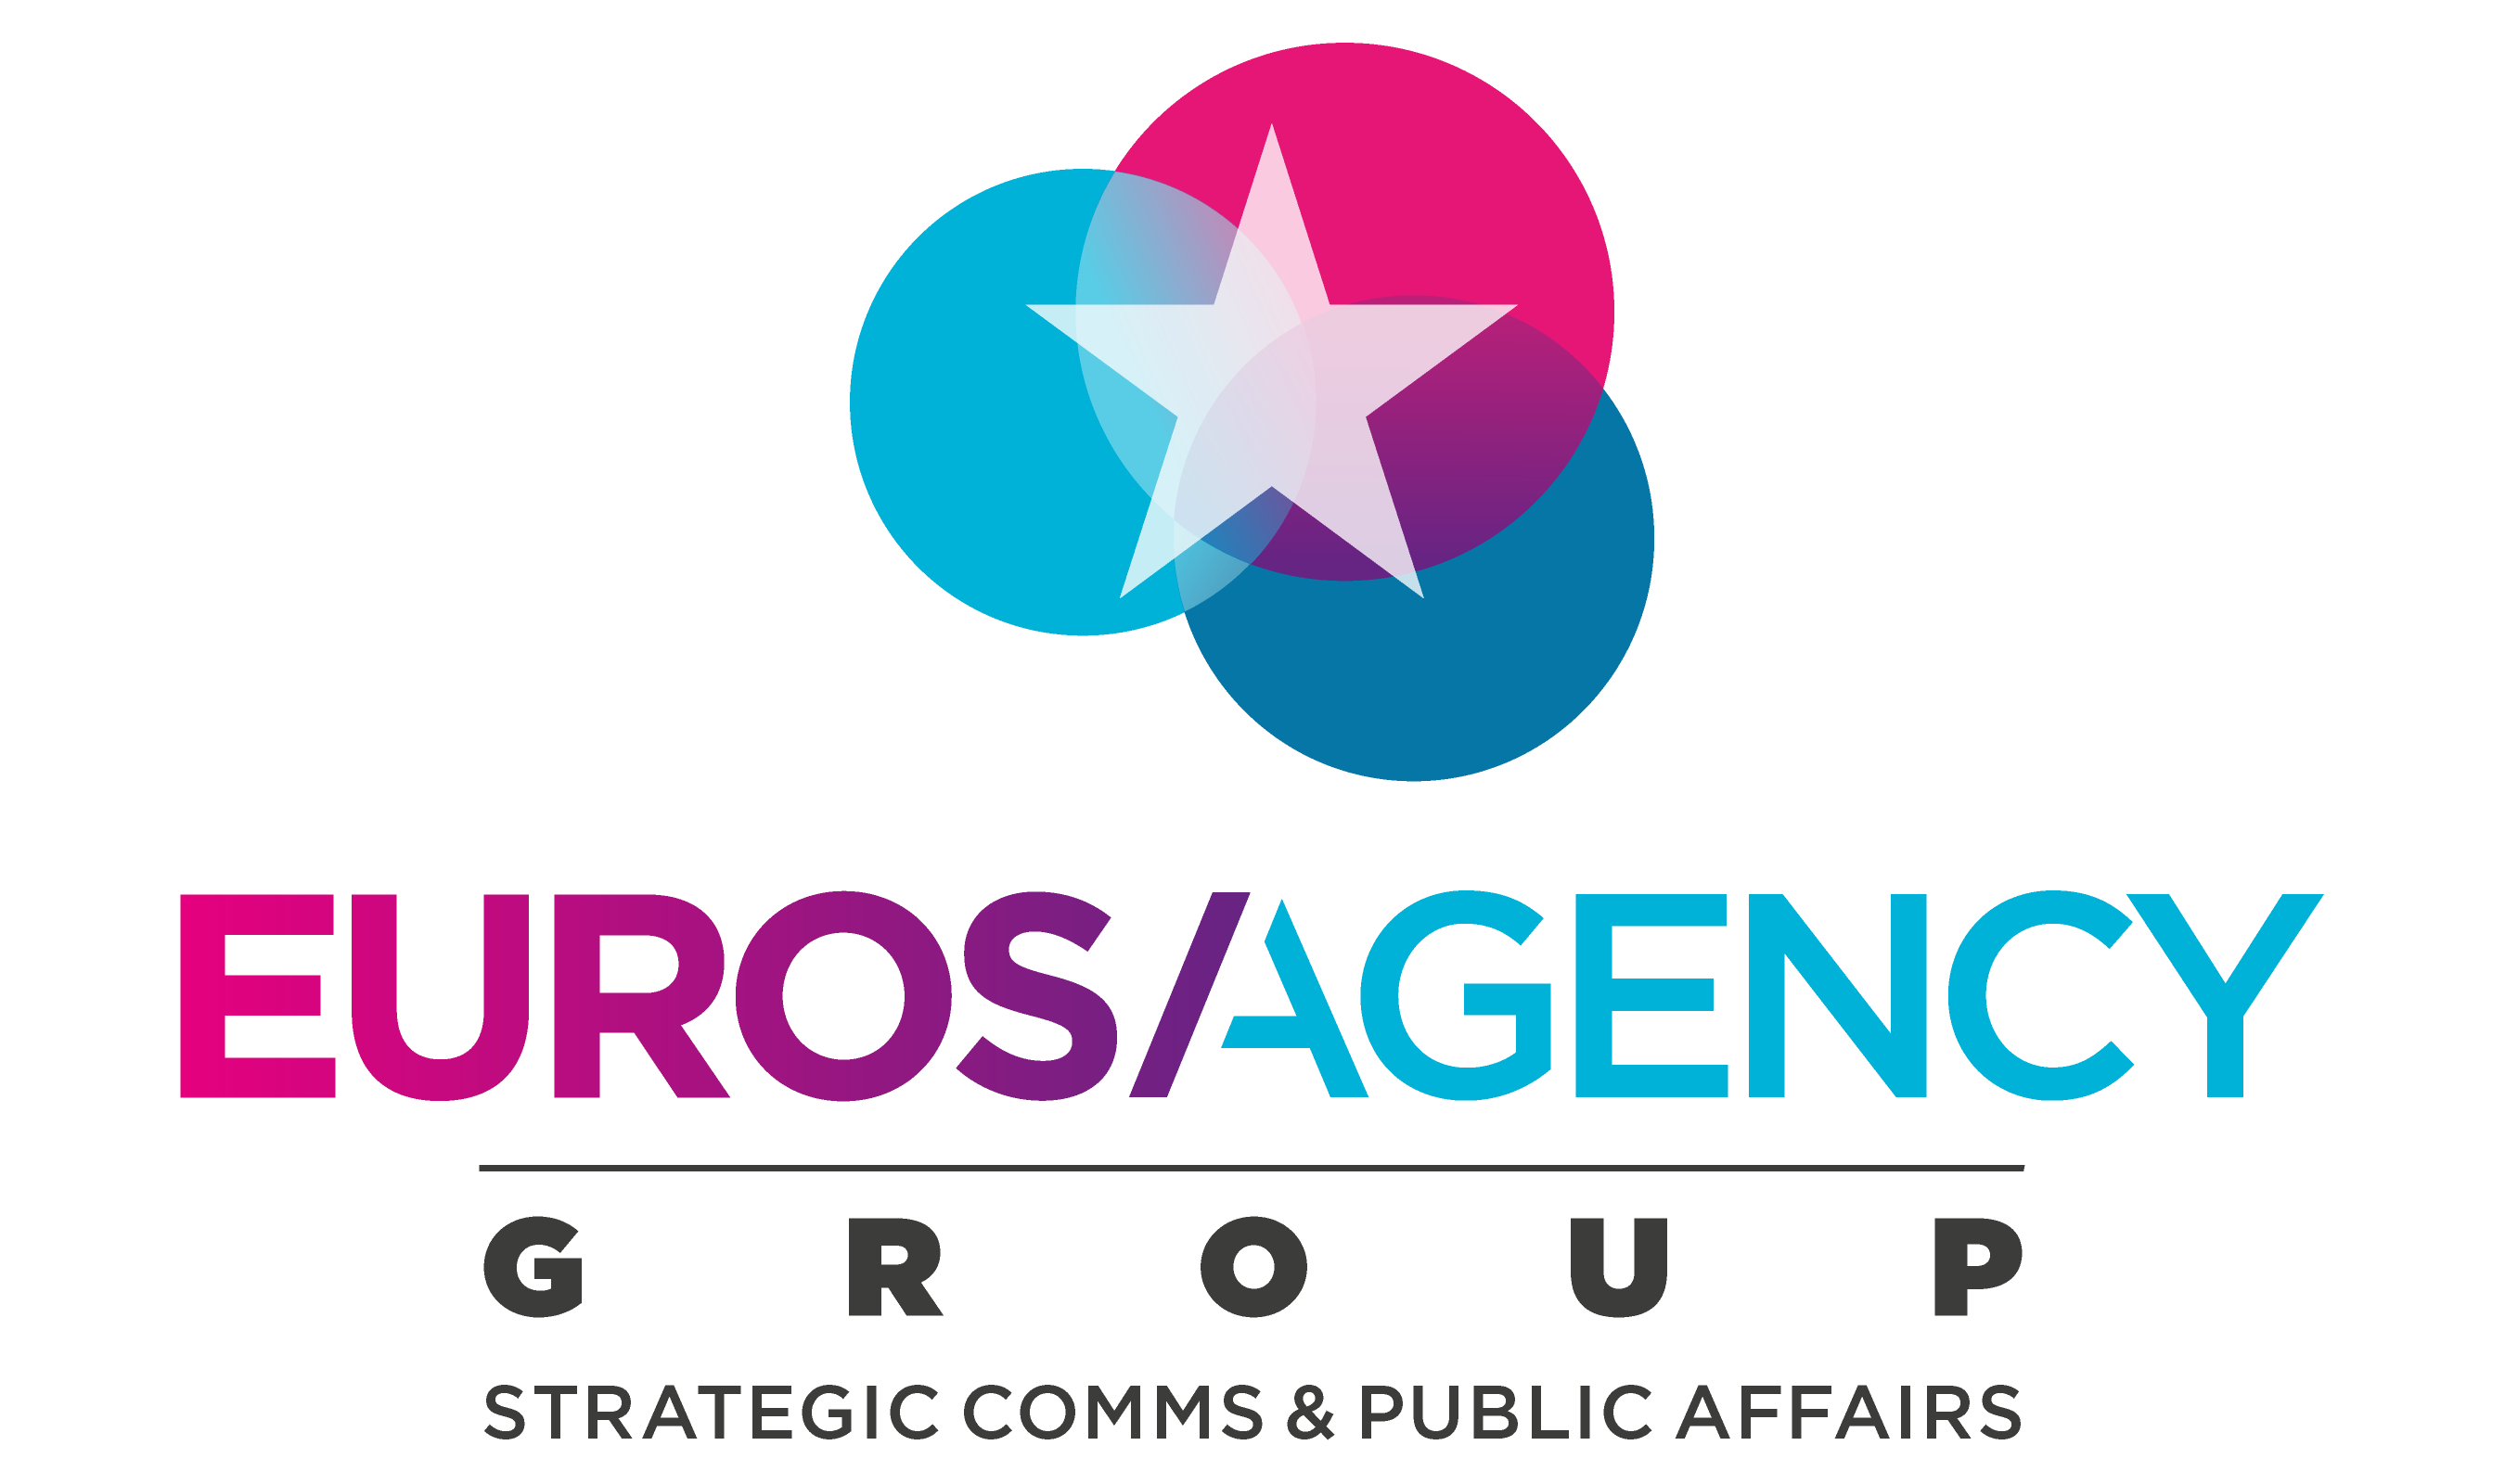 Euros Agency